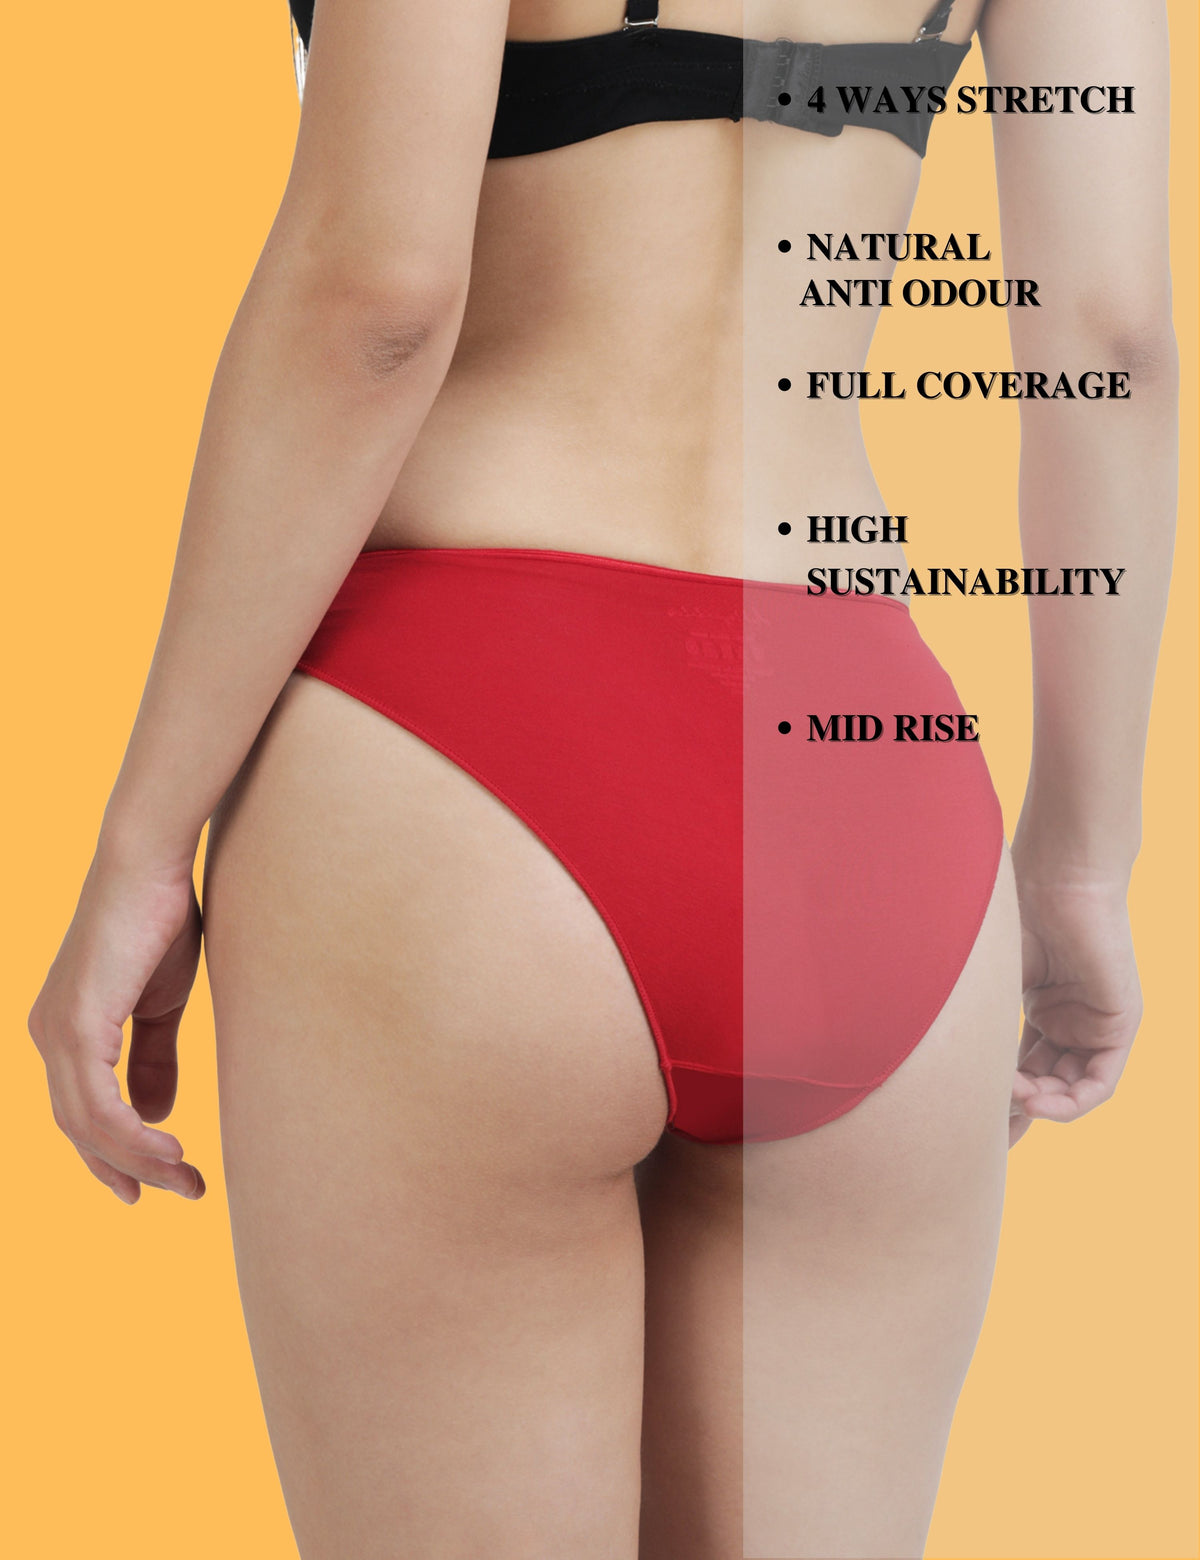 Ashleyandalvis Bamboo Micro Modal antibacterial - Bikini panties (EB-AN-SR) (pack of 3)